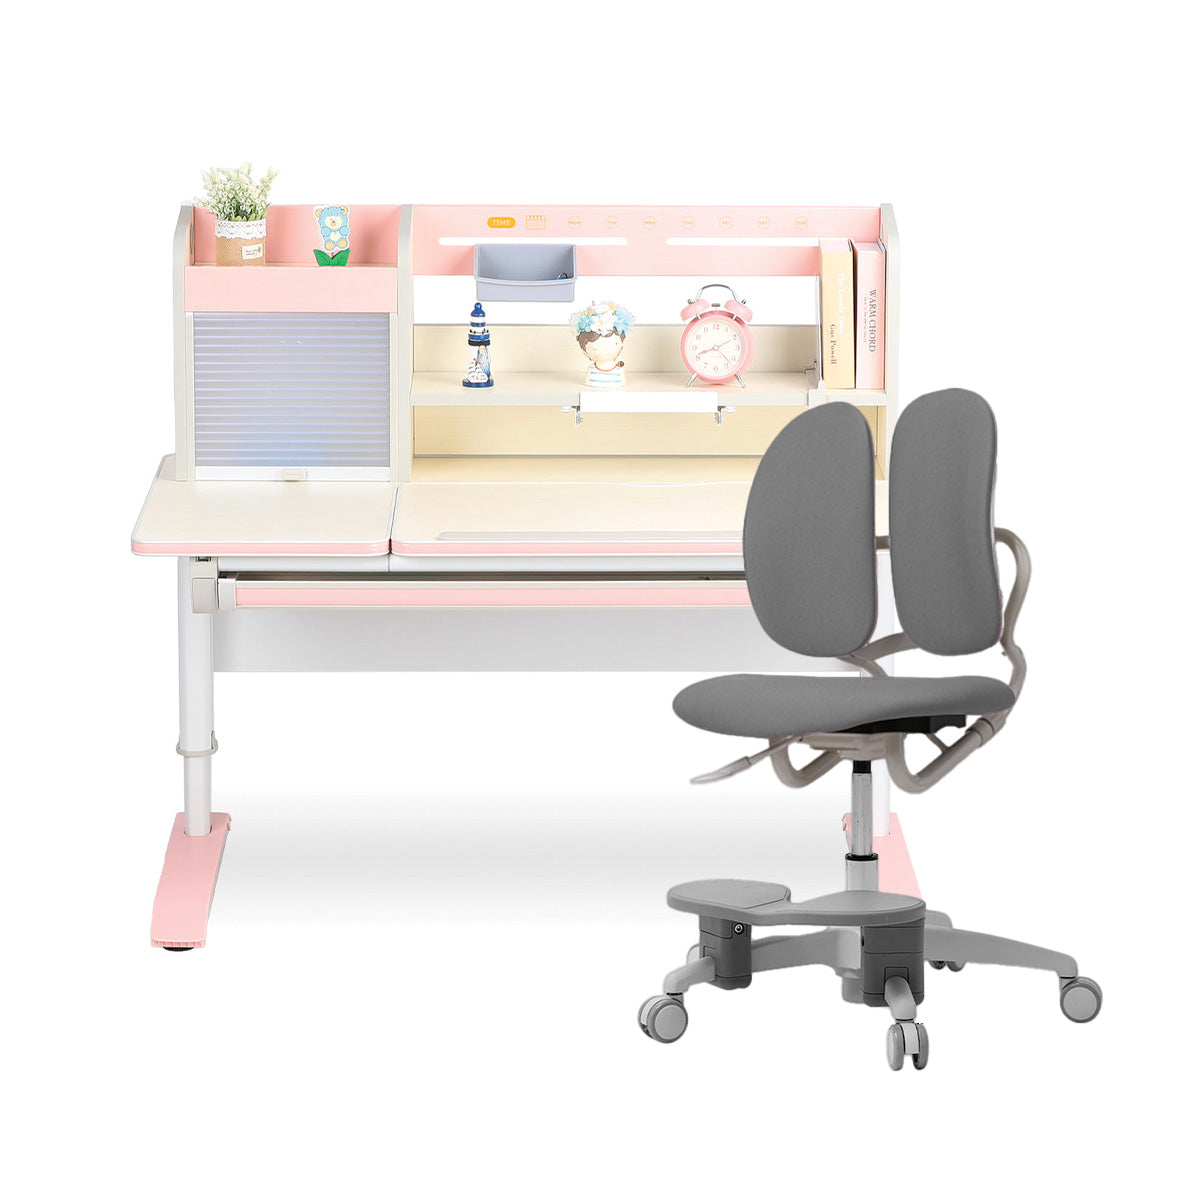 Impact Ergo-Growing Study Desk And Chair Set 1200mm x 700mm, IM-D12L1200V2-PK